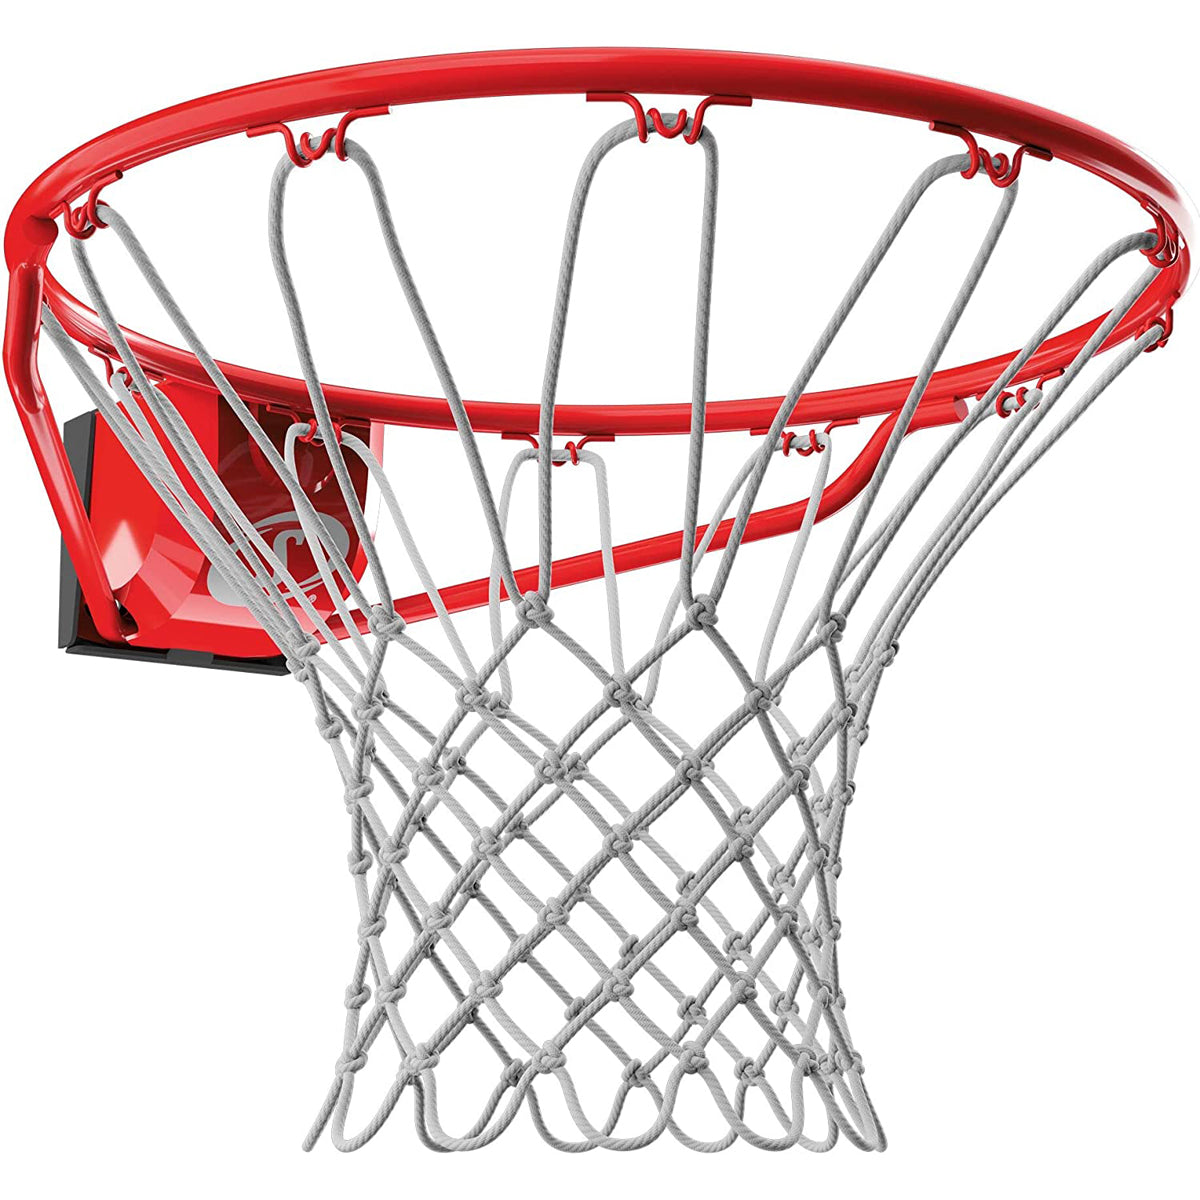 Spalding Pro Slam Outdoor Basketball Rim - Red Spalding